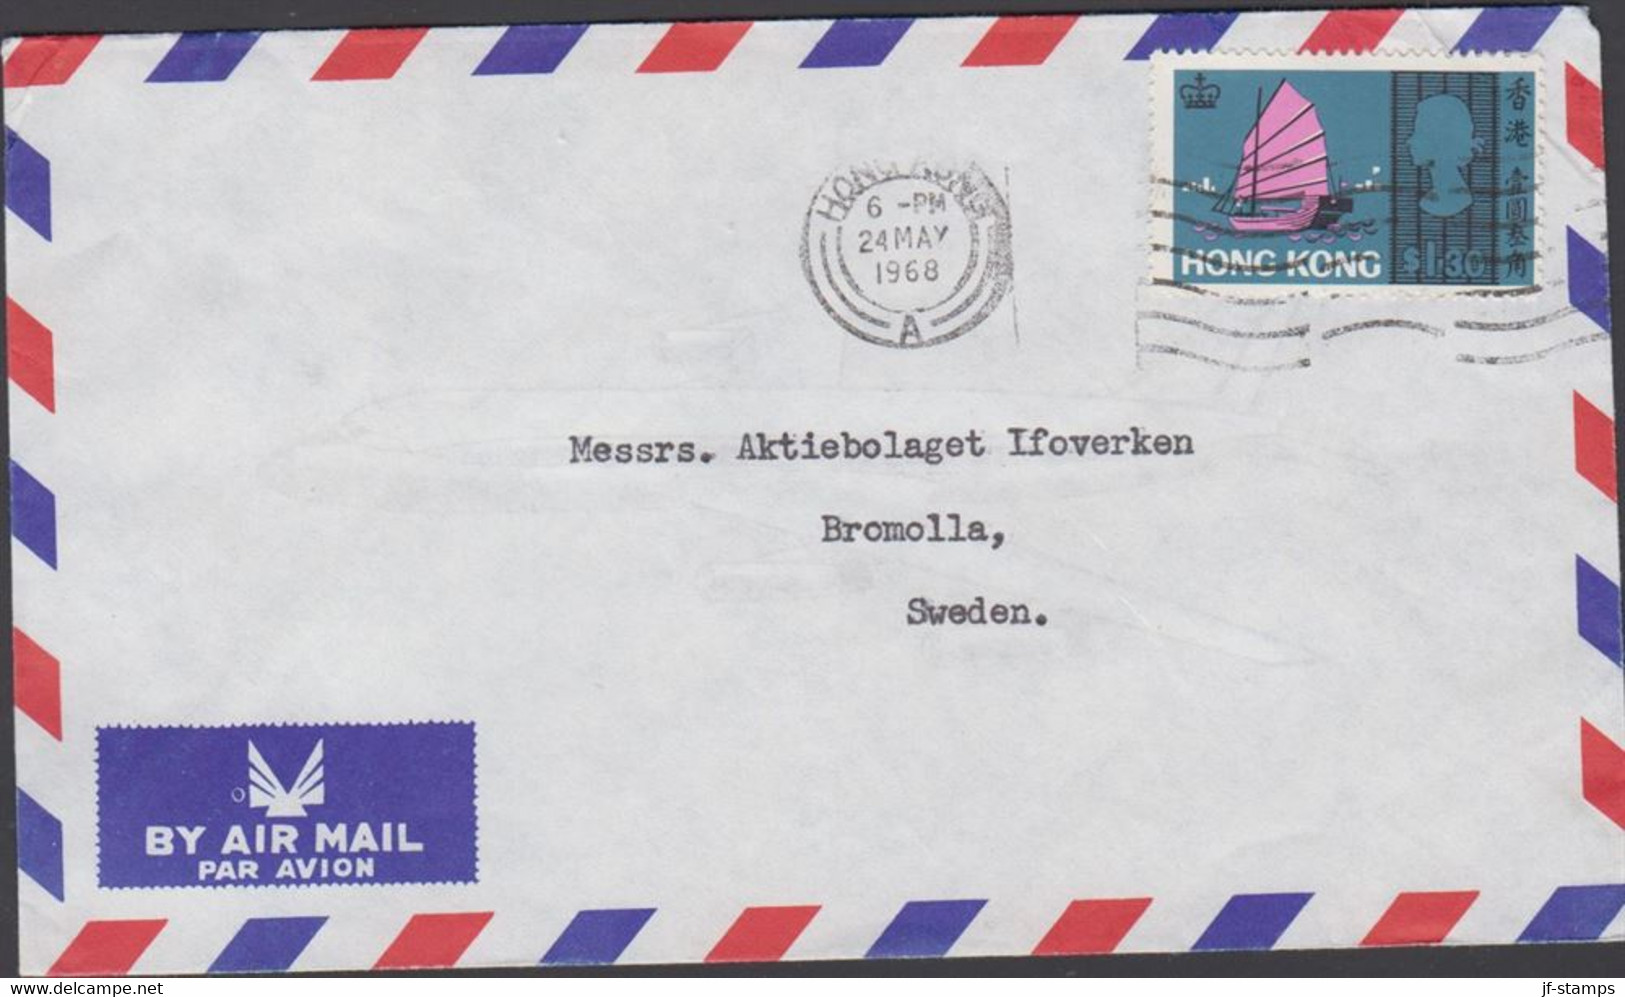 1968. HONG KONG $1.30 SHIPS On AIR MAIL Cover To Bromolla, Sweden Cancelled HONG KONG 24 MAY ... (Michel 237) - JF427093 - Briefe U. Dokumente